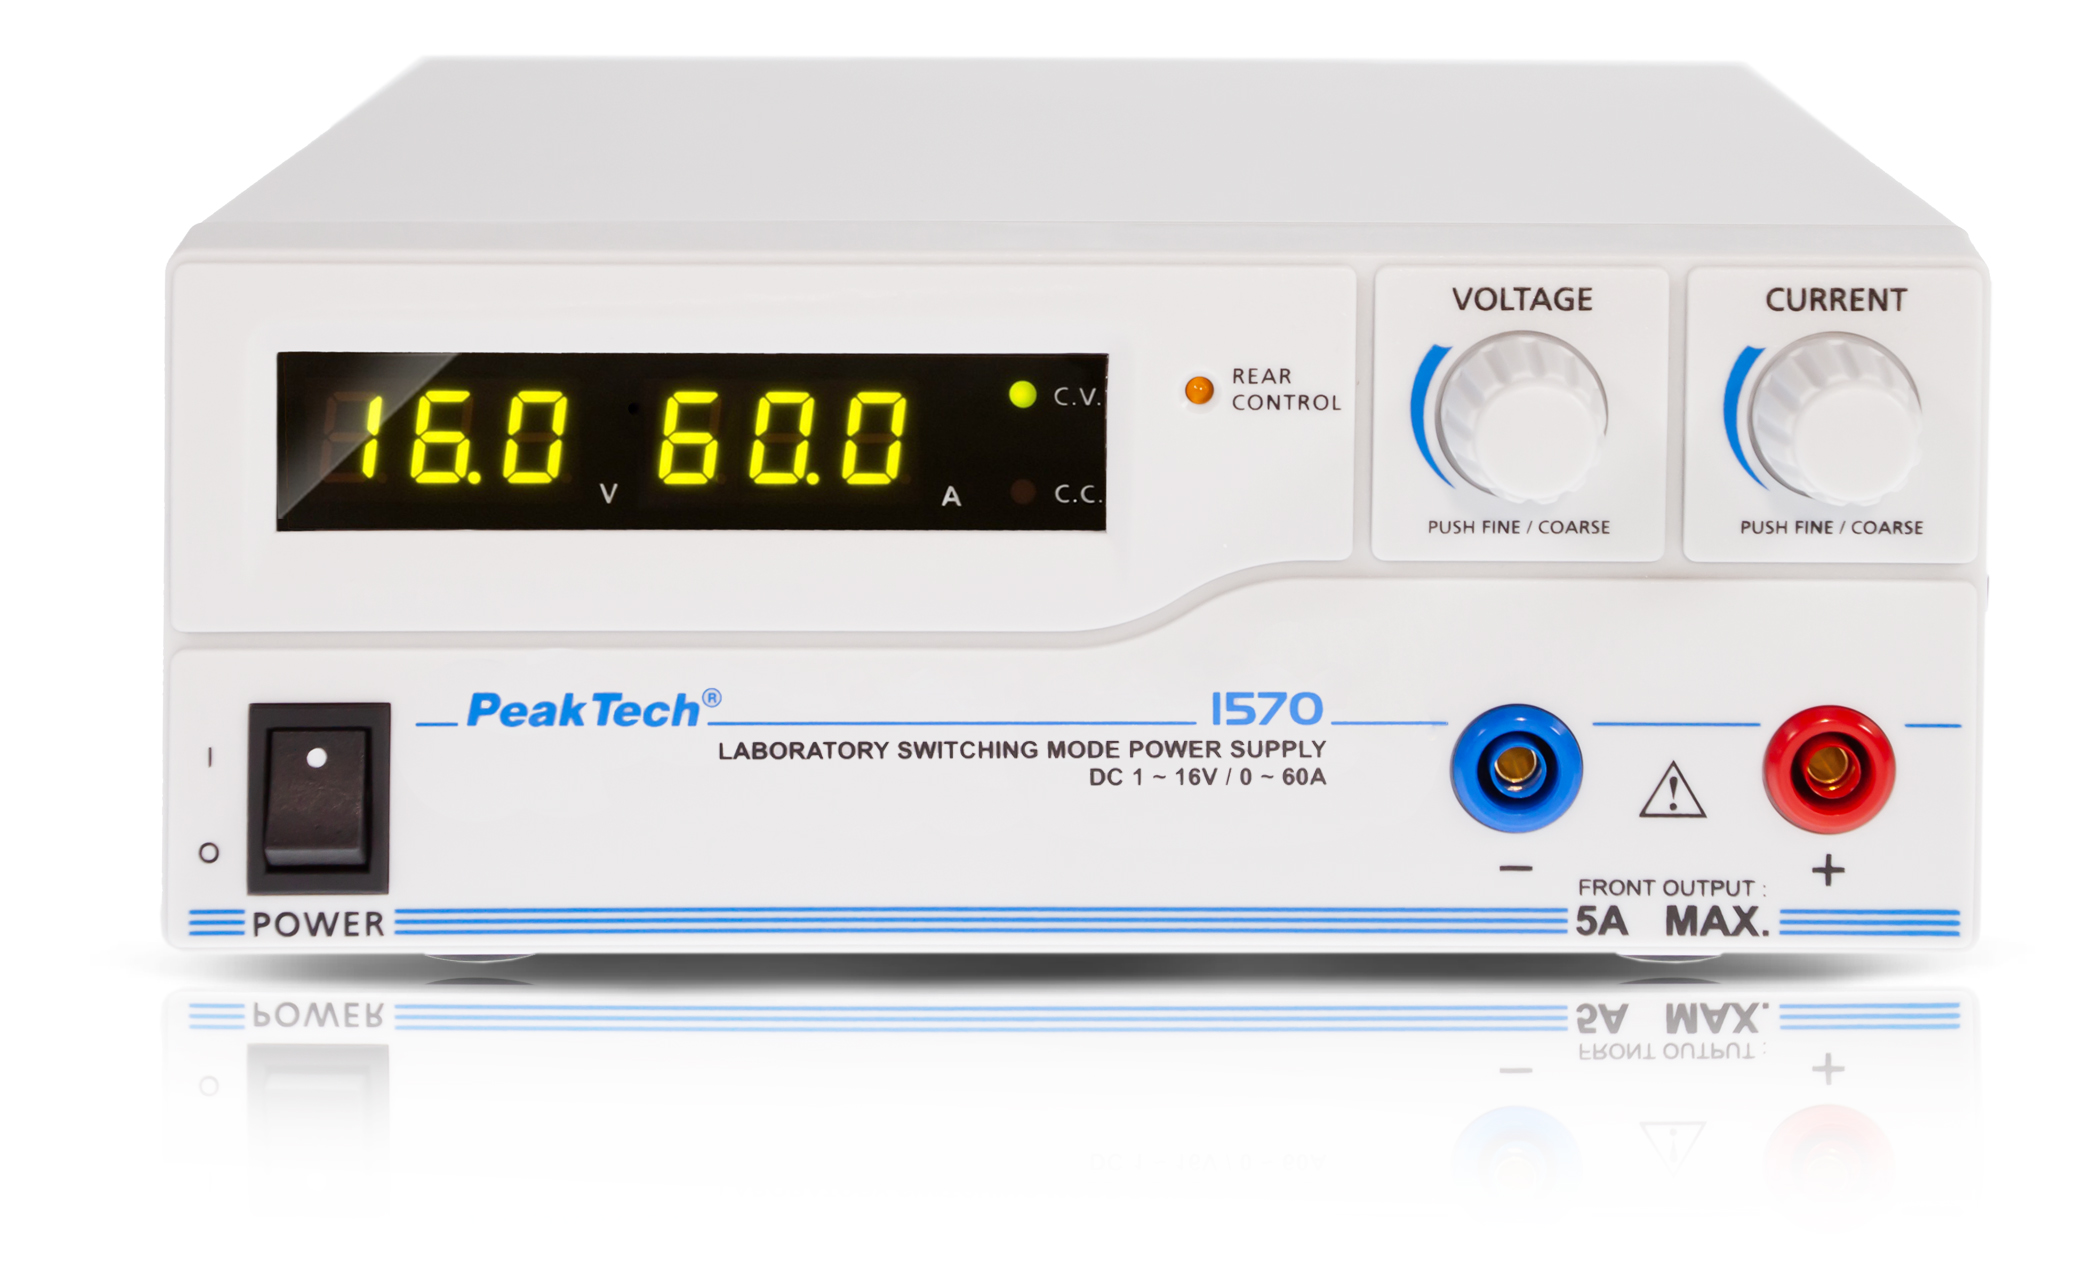 «PeakTech® P 1570» Laboratory power supply DC 1 - 16V / 0 - 60A & USB